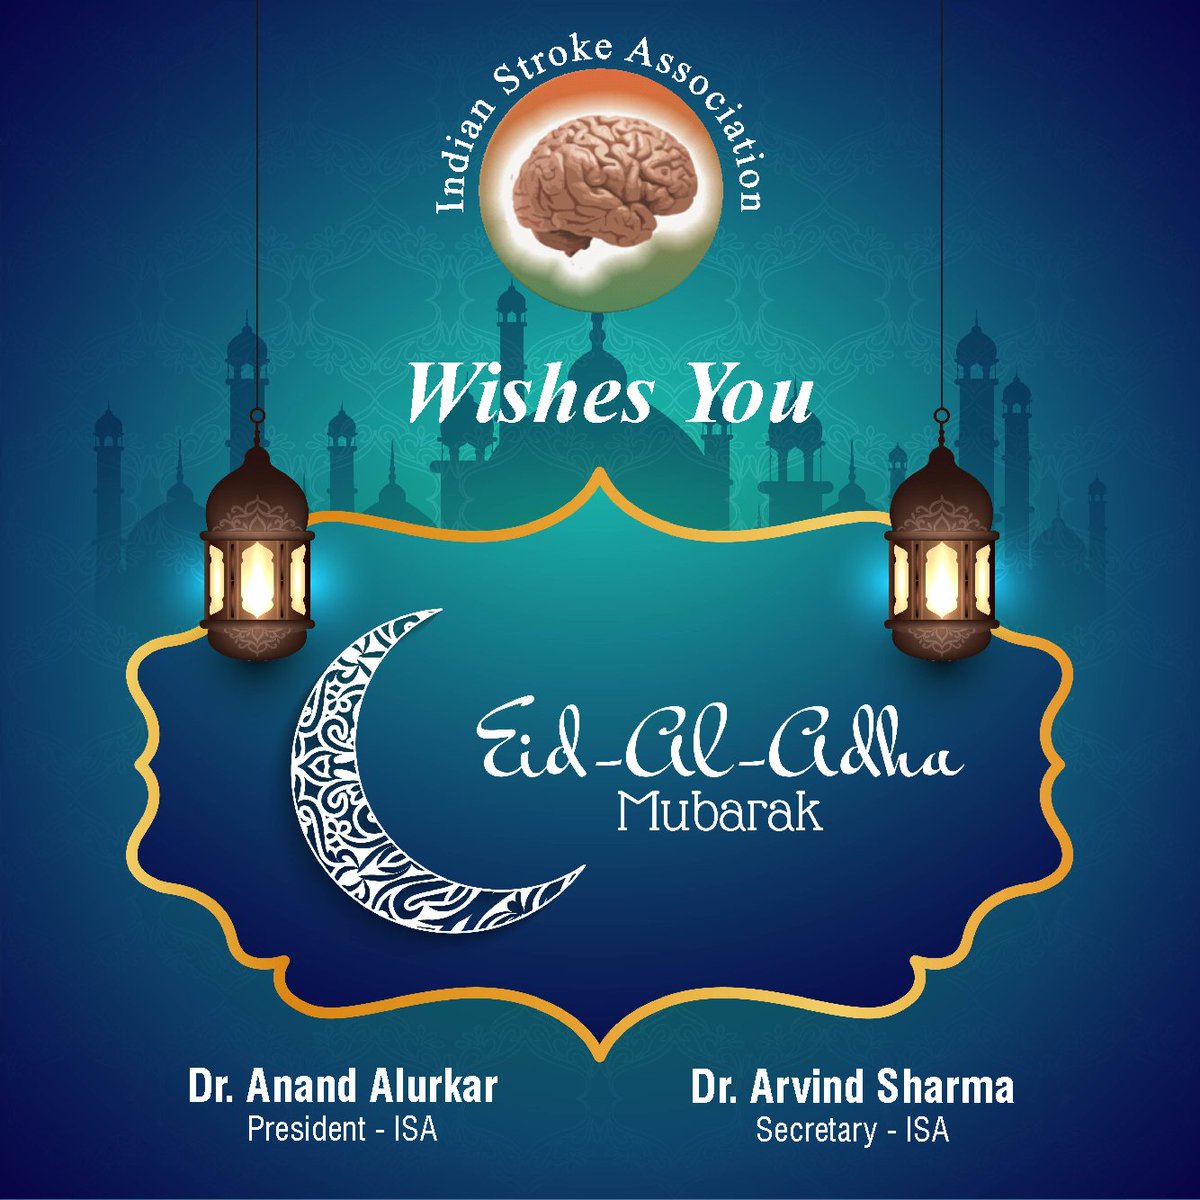 RT @strokeindian: Indian Stroke Association Wishes You Eid al-Adha Mubarak https://t.co/uMrdz4fBHi